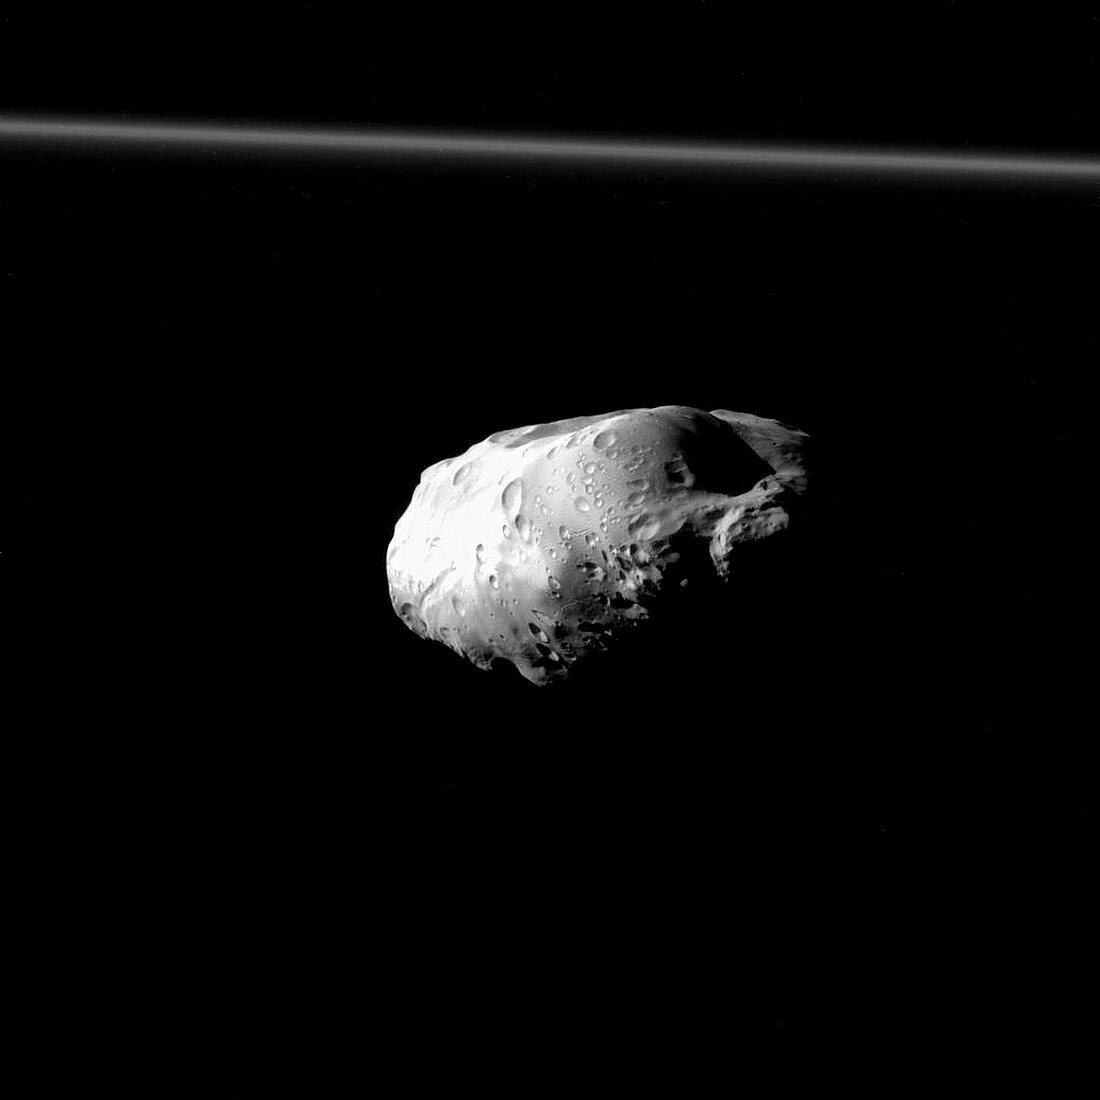 Saturn's moon Prometheus, Cassini image